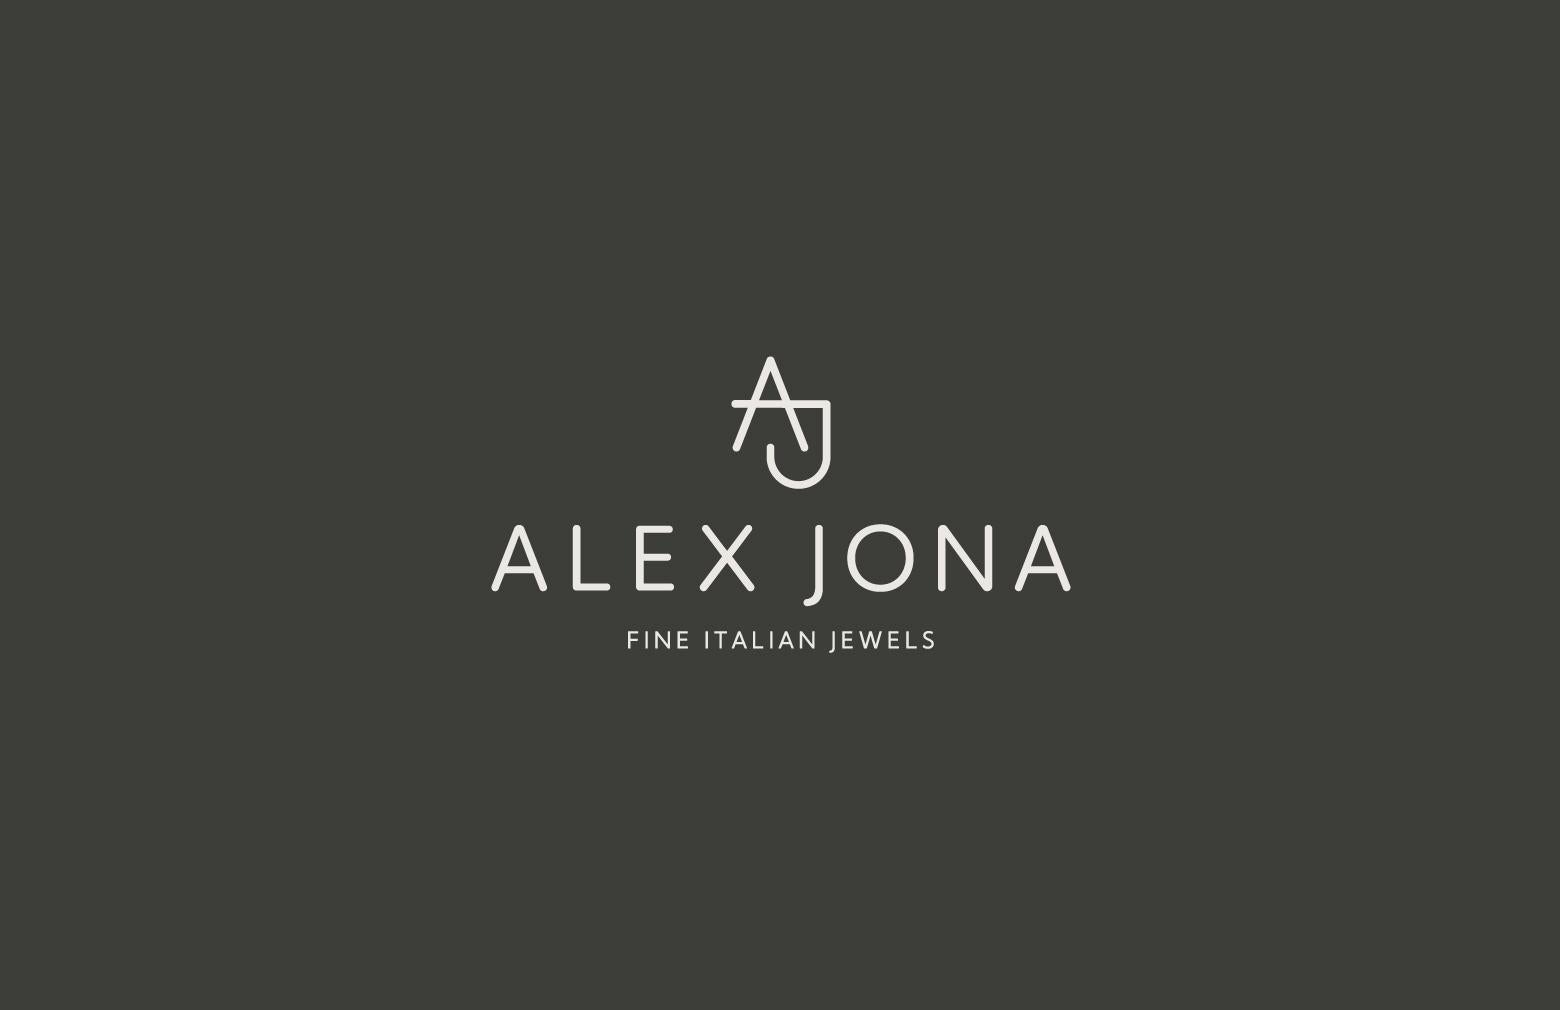 Alex Jona Lapis Lazuli and Onyx Bar Sterling Silver Cufflinks For Sale 5